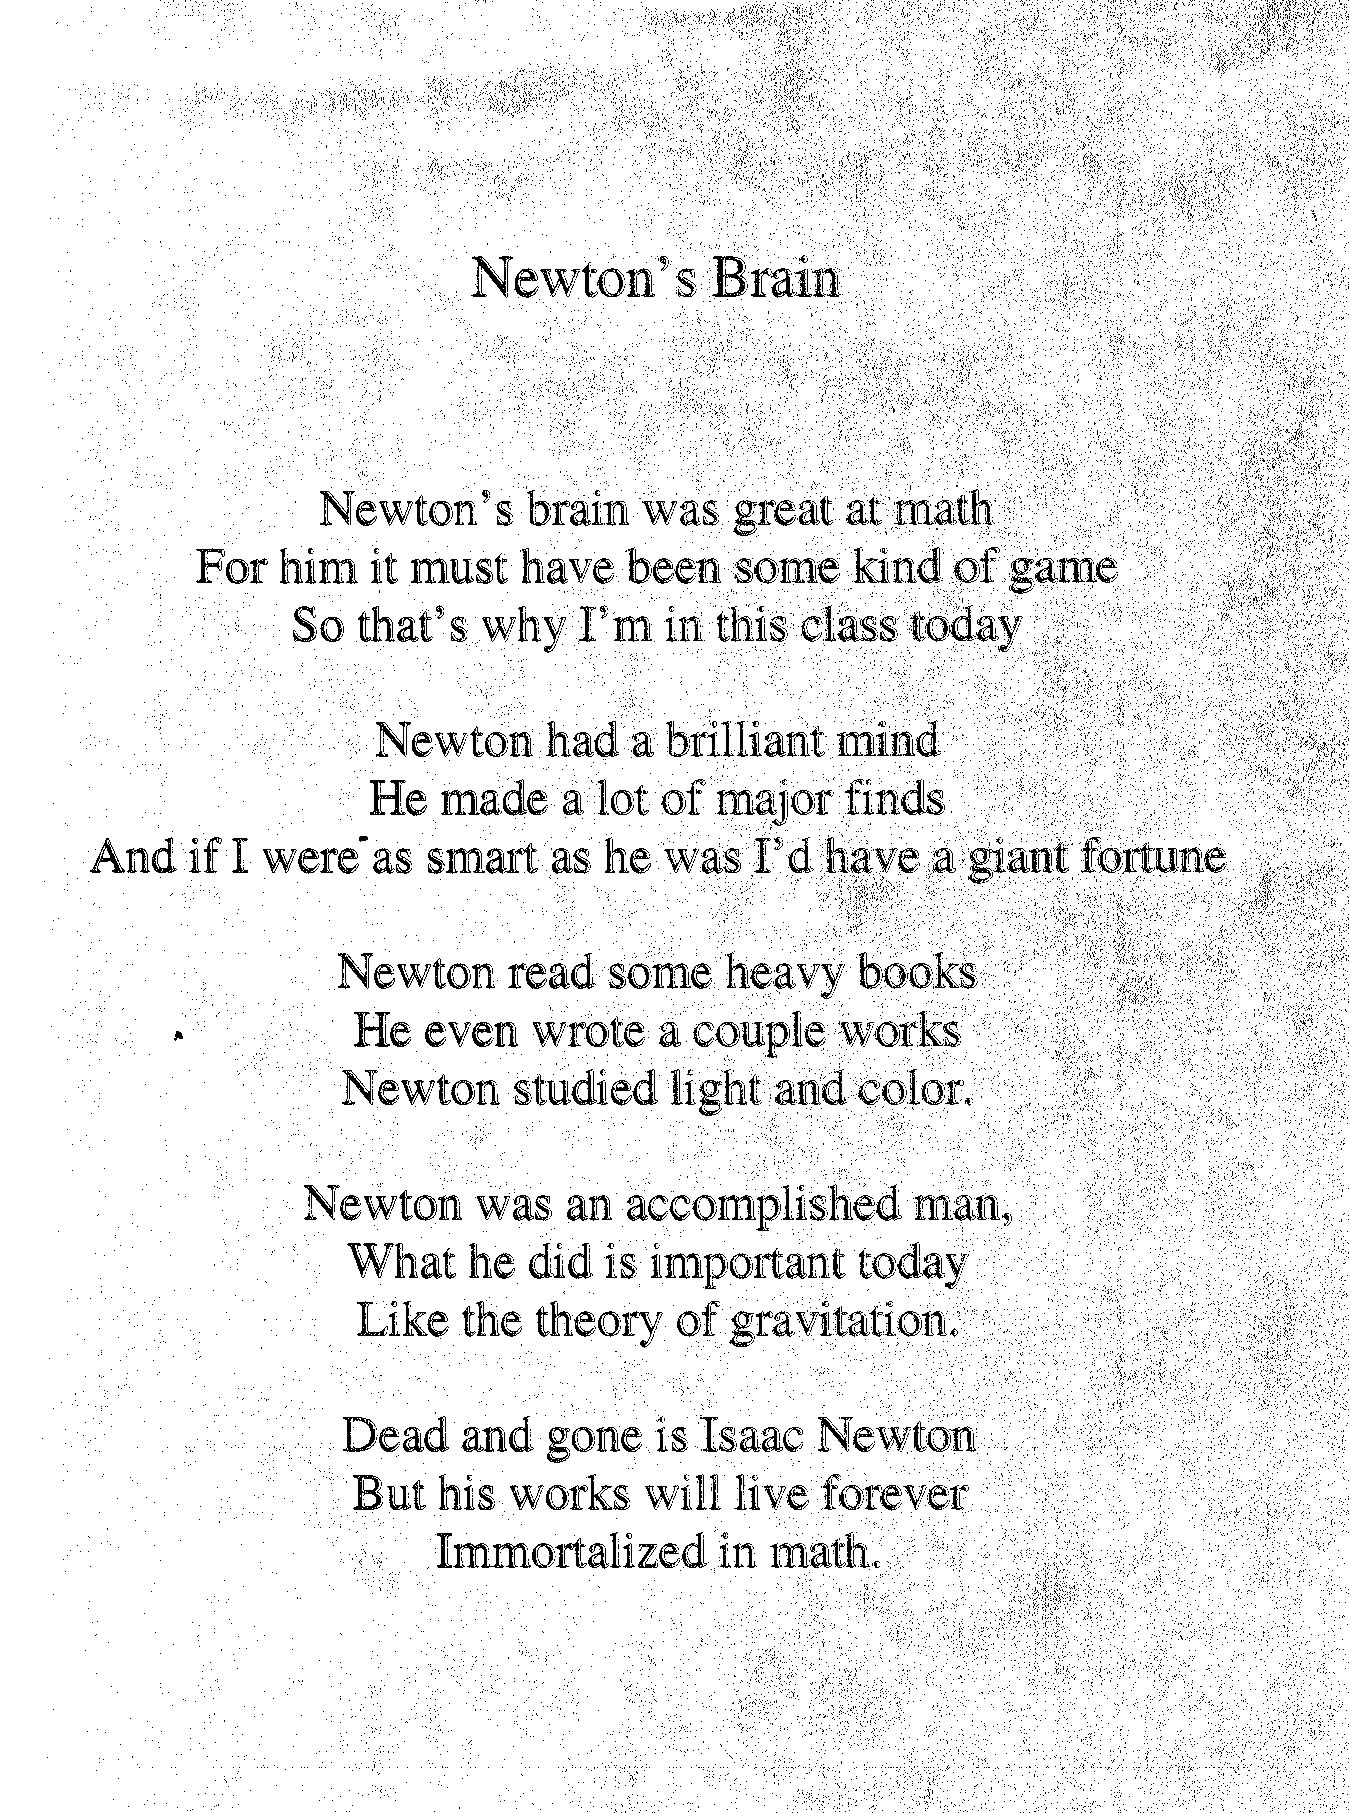 Newton's Brain poem